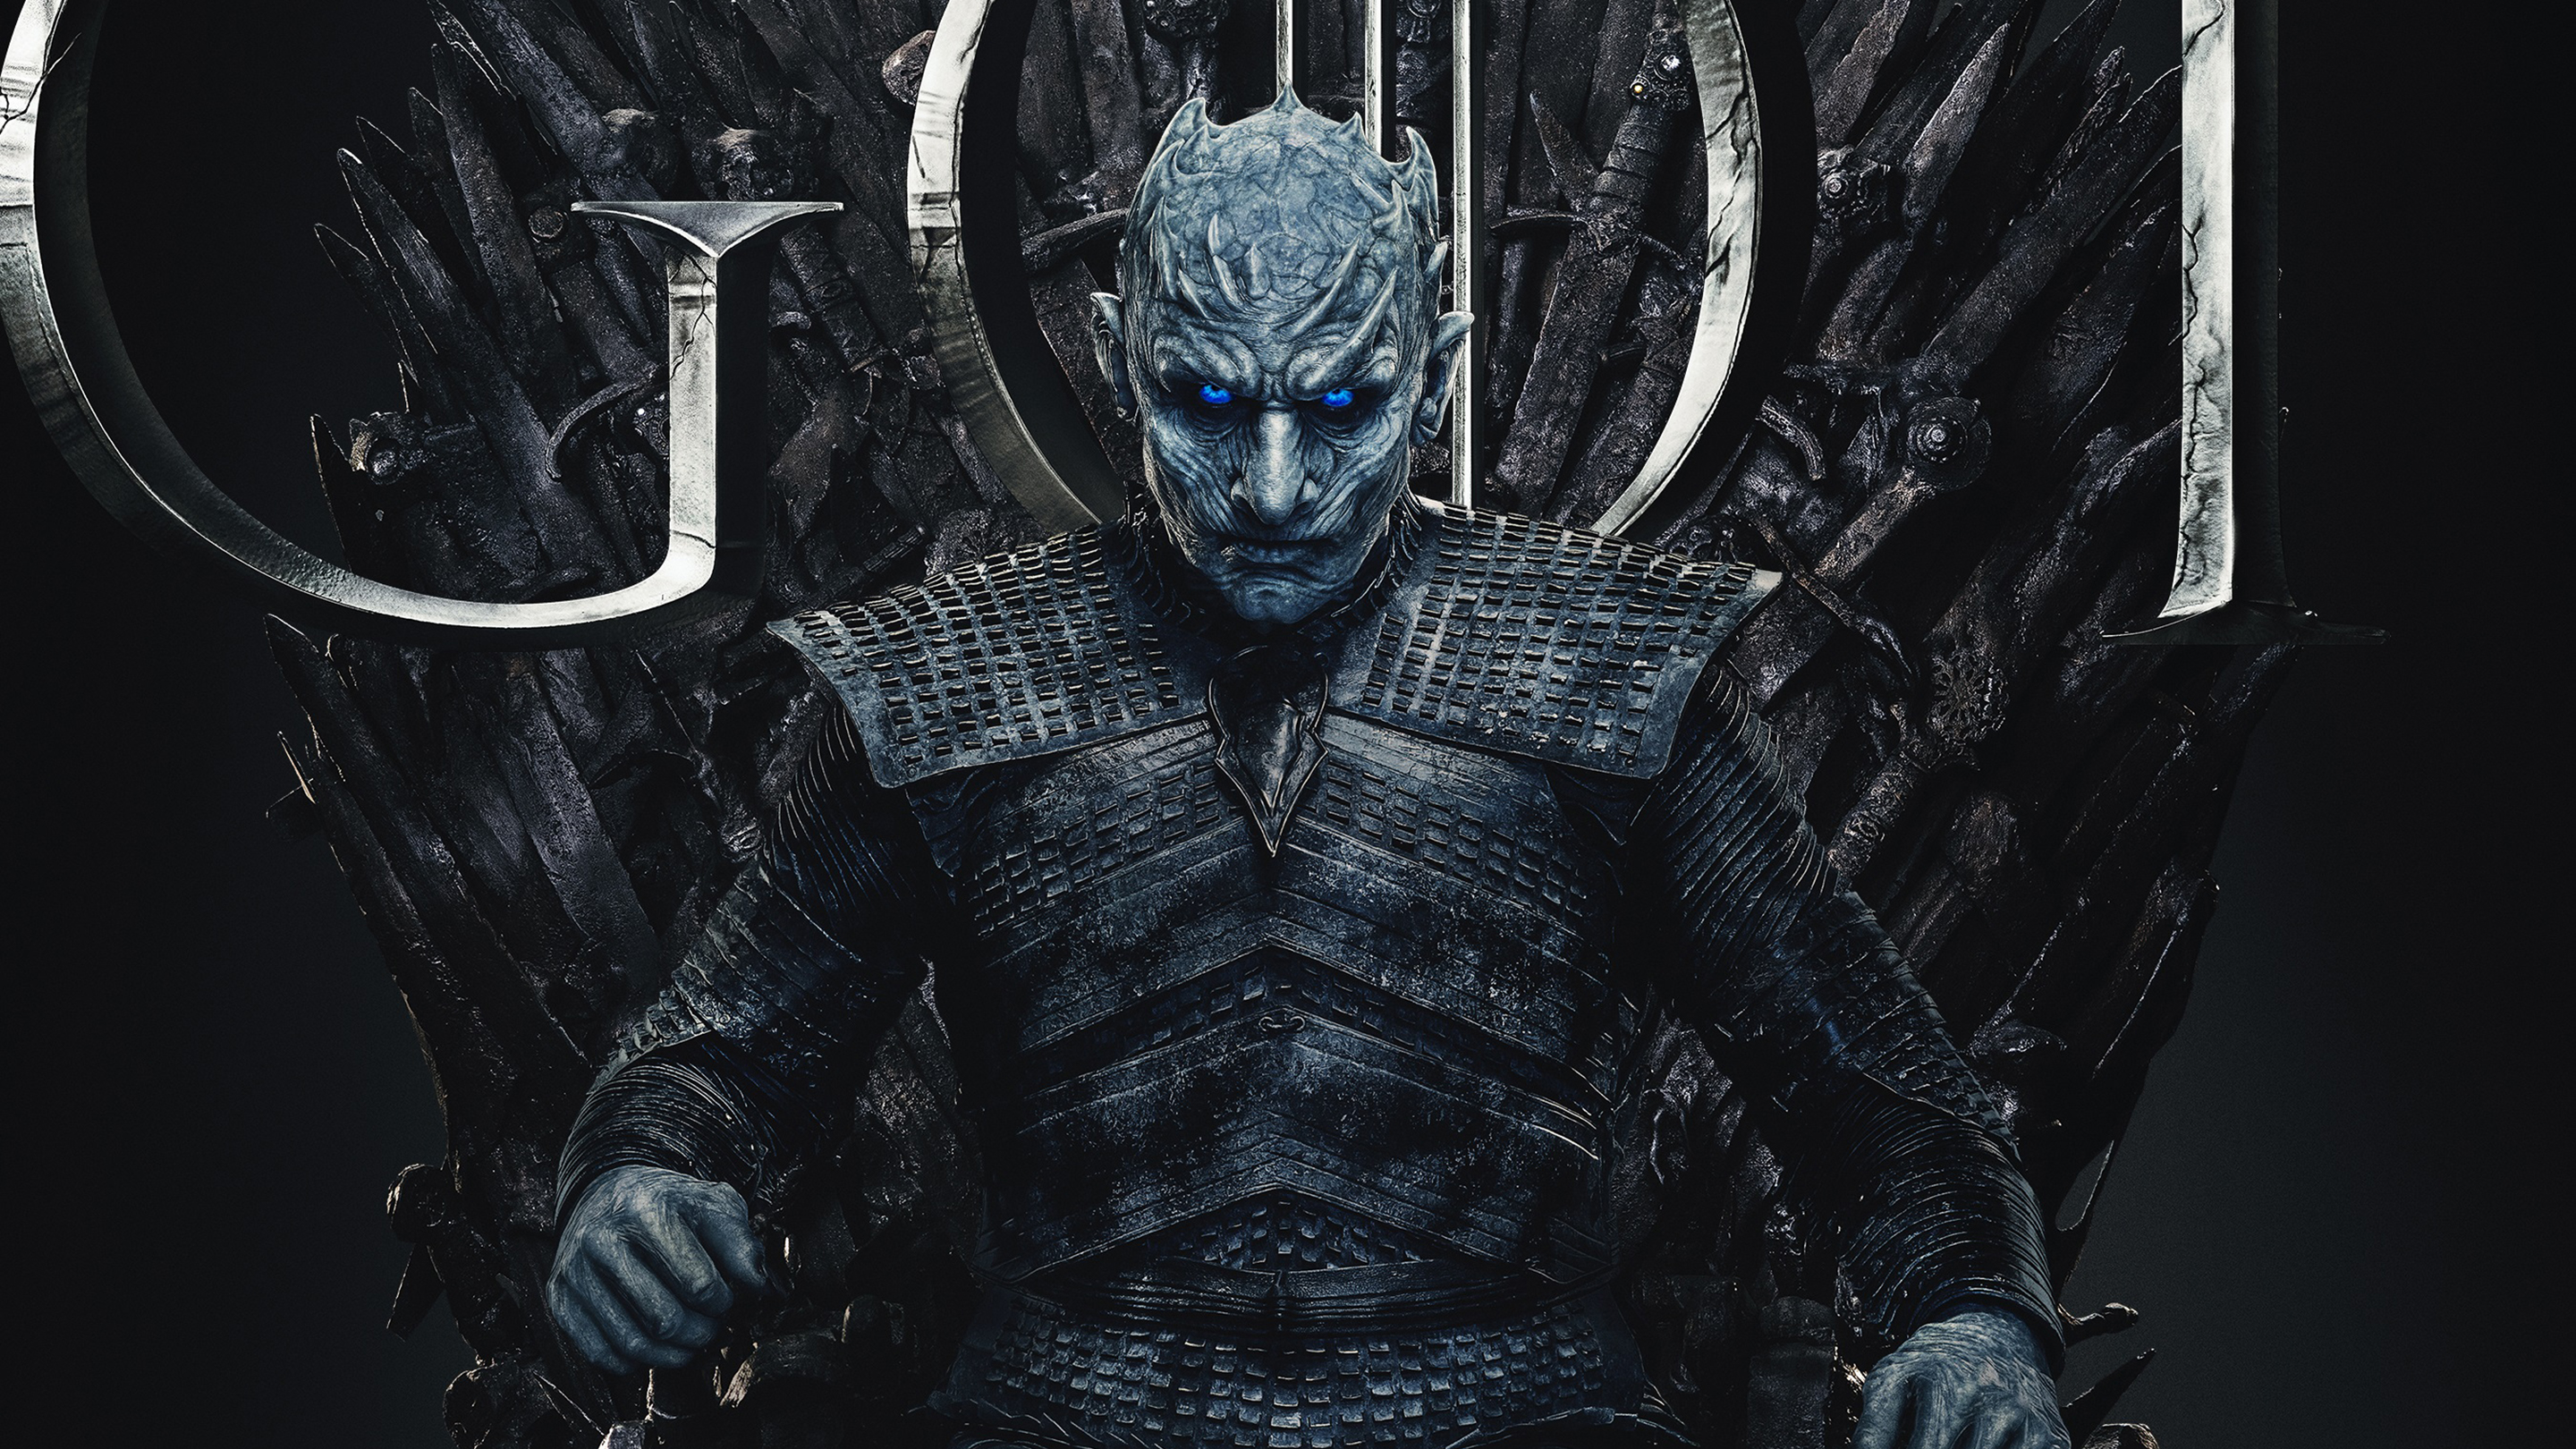 Night King in Game of Thrones Final Season 8 2019 Wallpapers